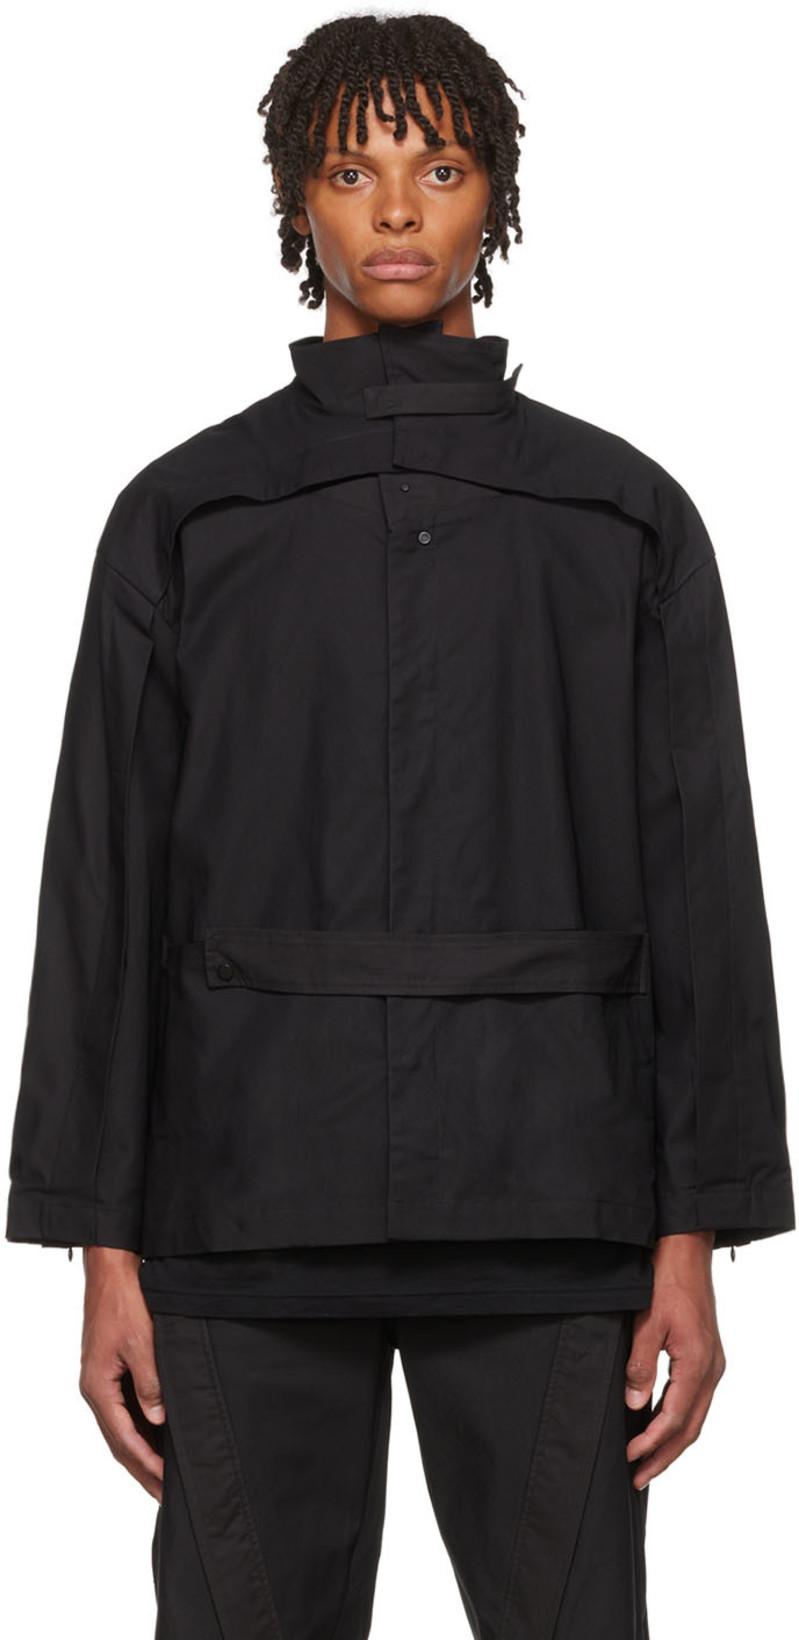 Black Nylon Jacket by AENRMOUS